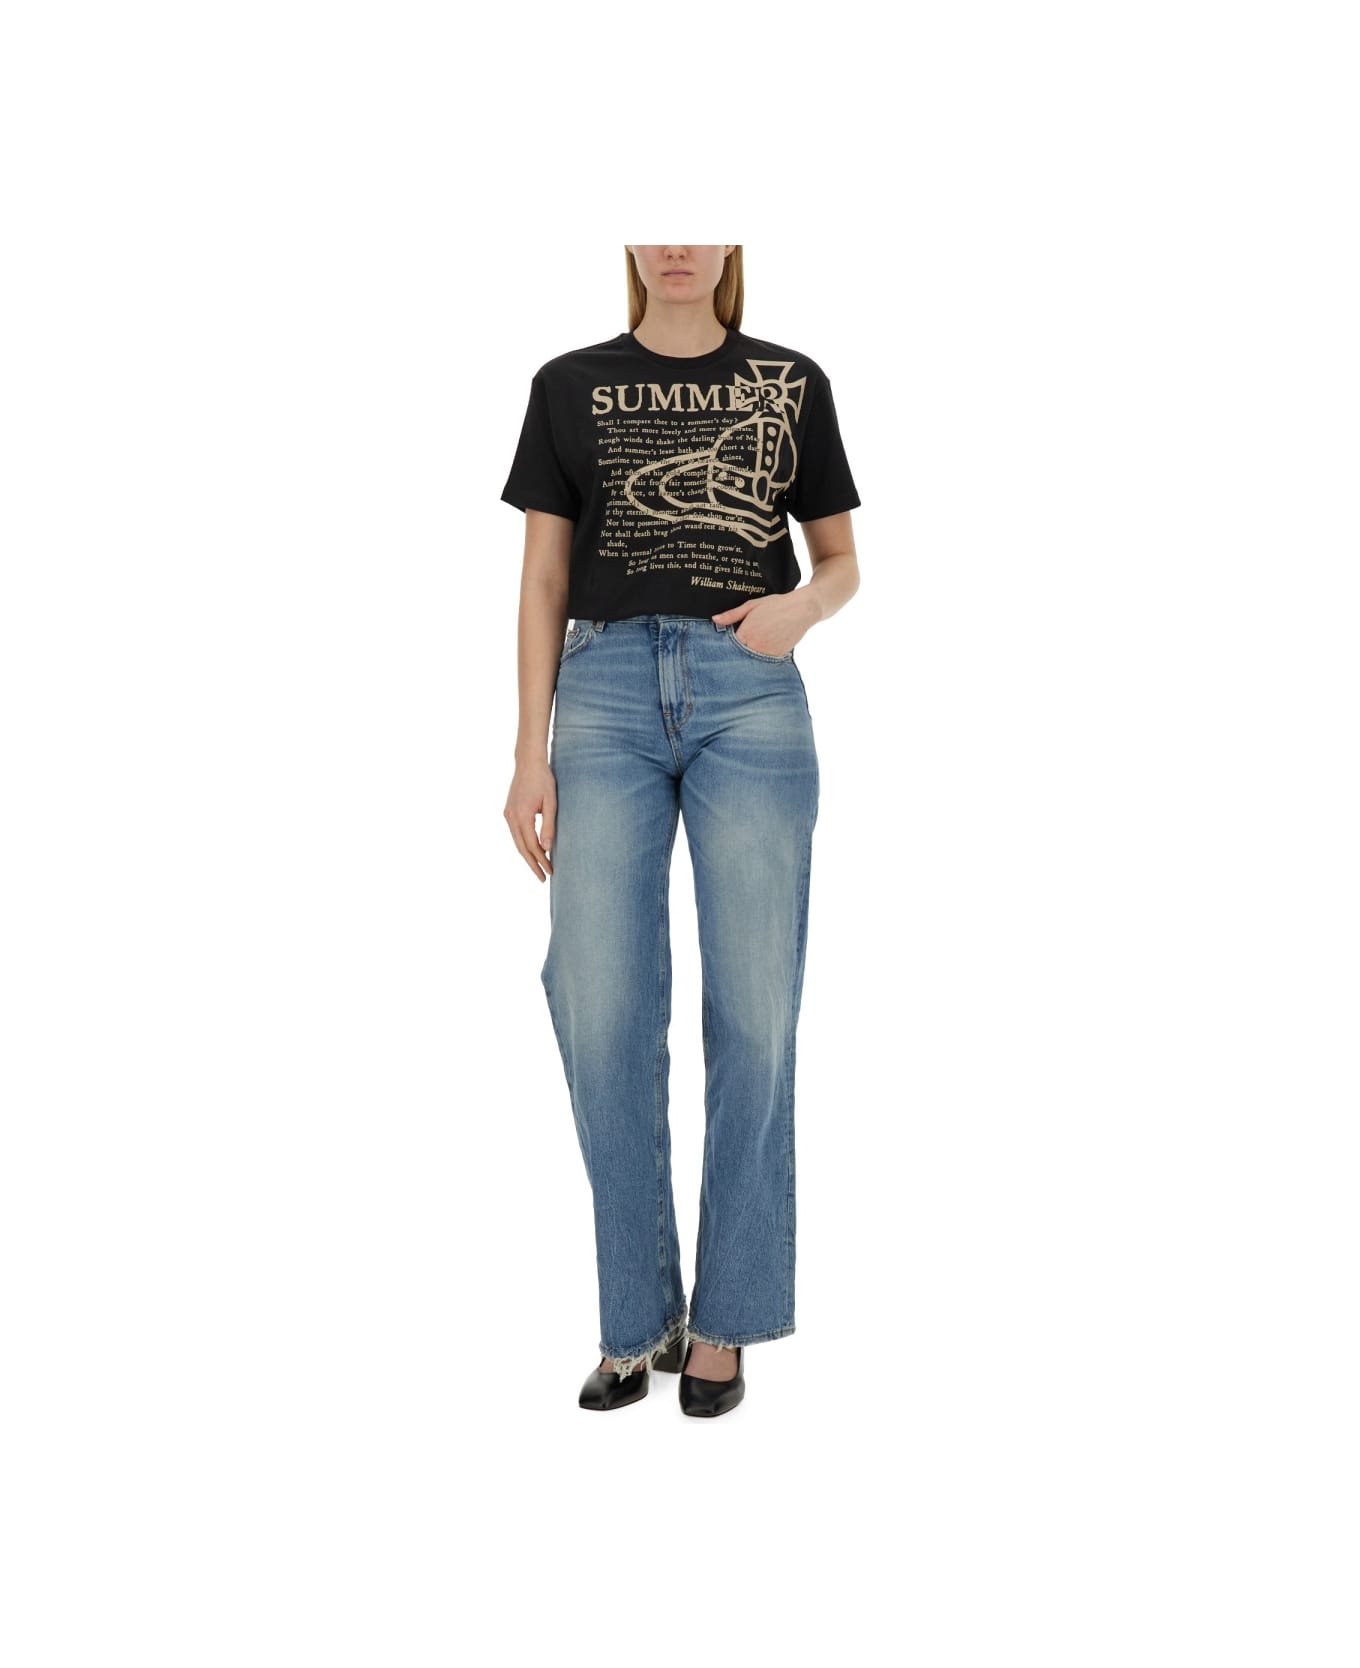 Vivienne Westwood "summer" T-shirt - BLACK